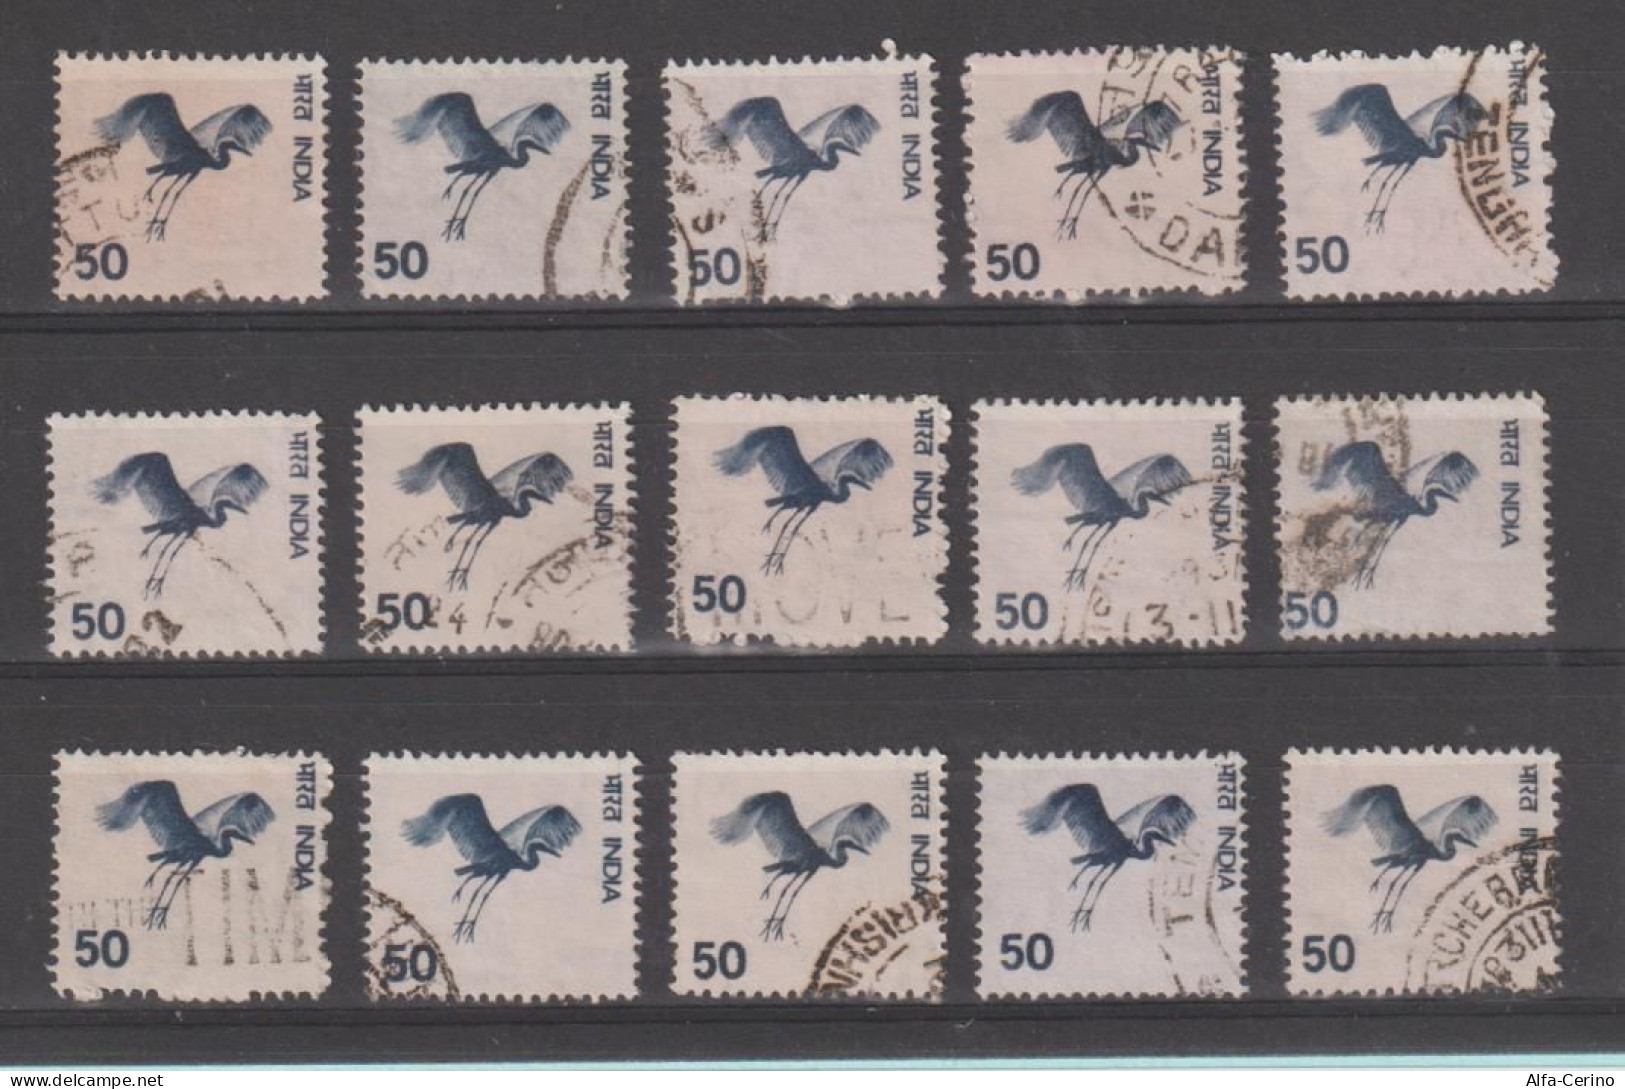 INDIA:  1975  GRU  IN  VOLO  -  50 P.  NERO  BLU  US. -  RIPETUTO  15  VOLTE  -  YV/TELL. 446 - Used Stamps